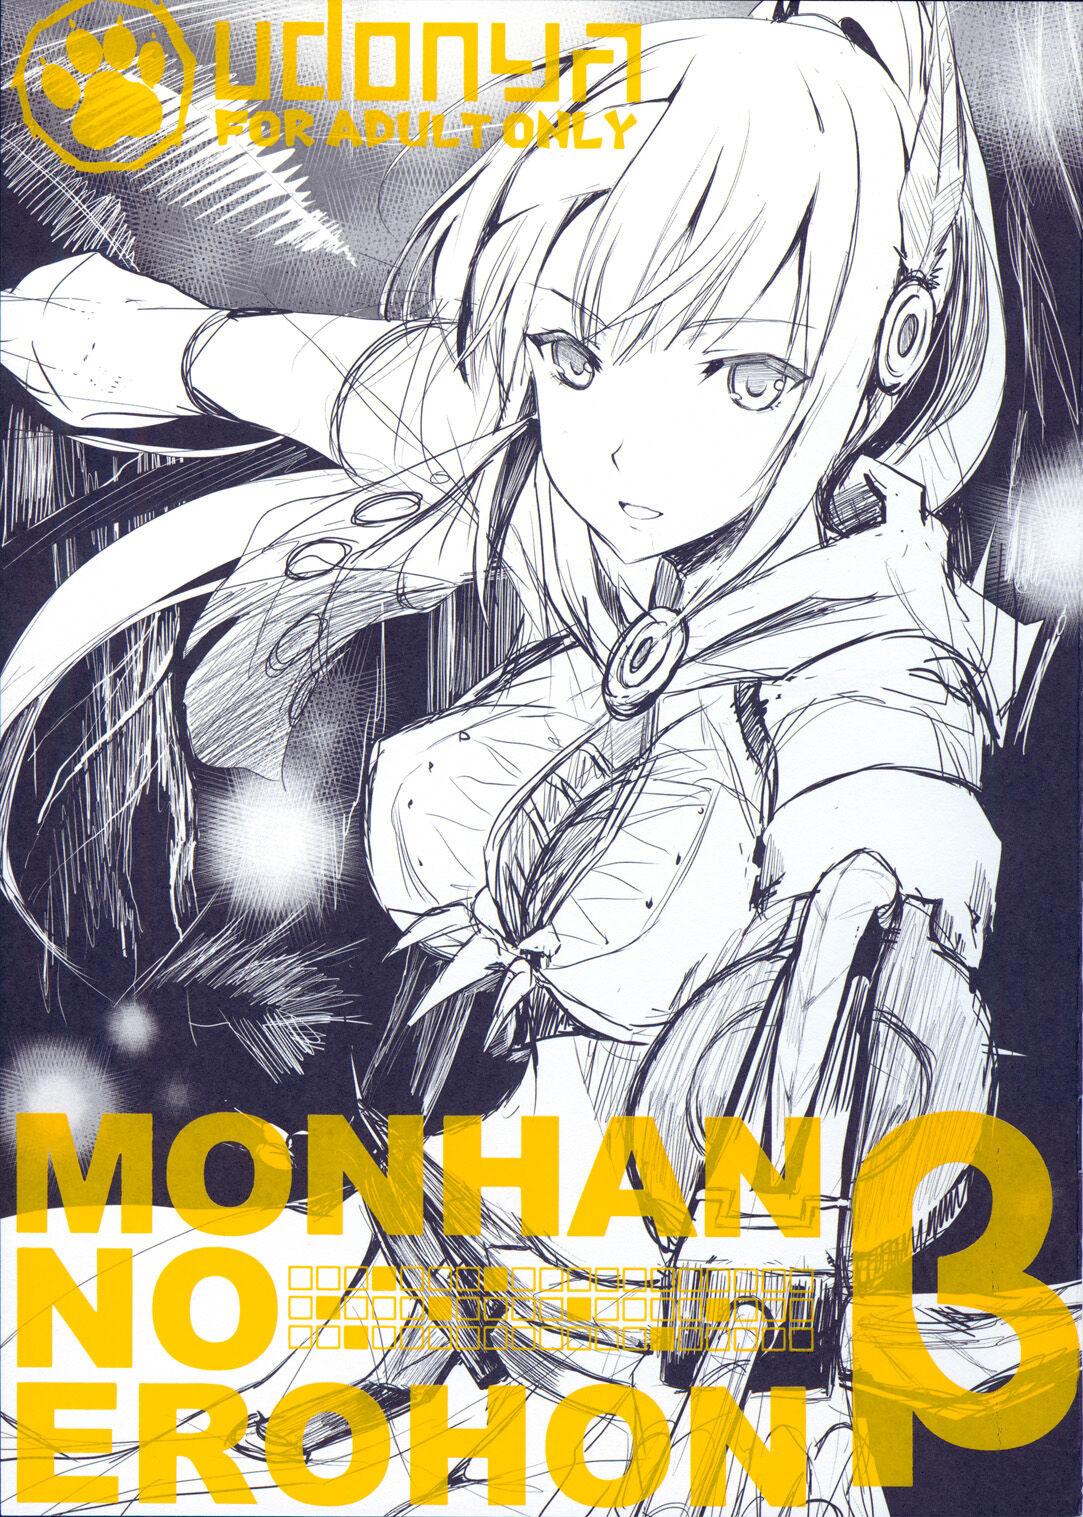 Mama Monhan no Erohon β - Monster hunter Free Amatuer Porn - Picture 2